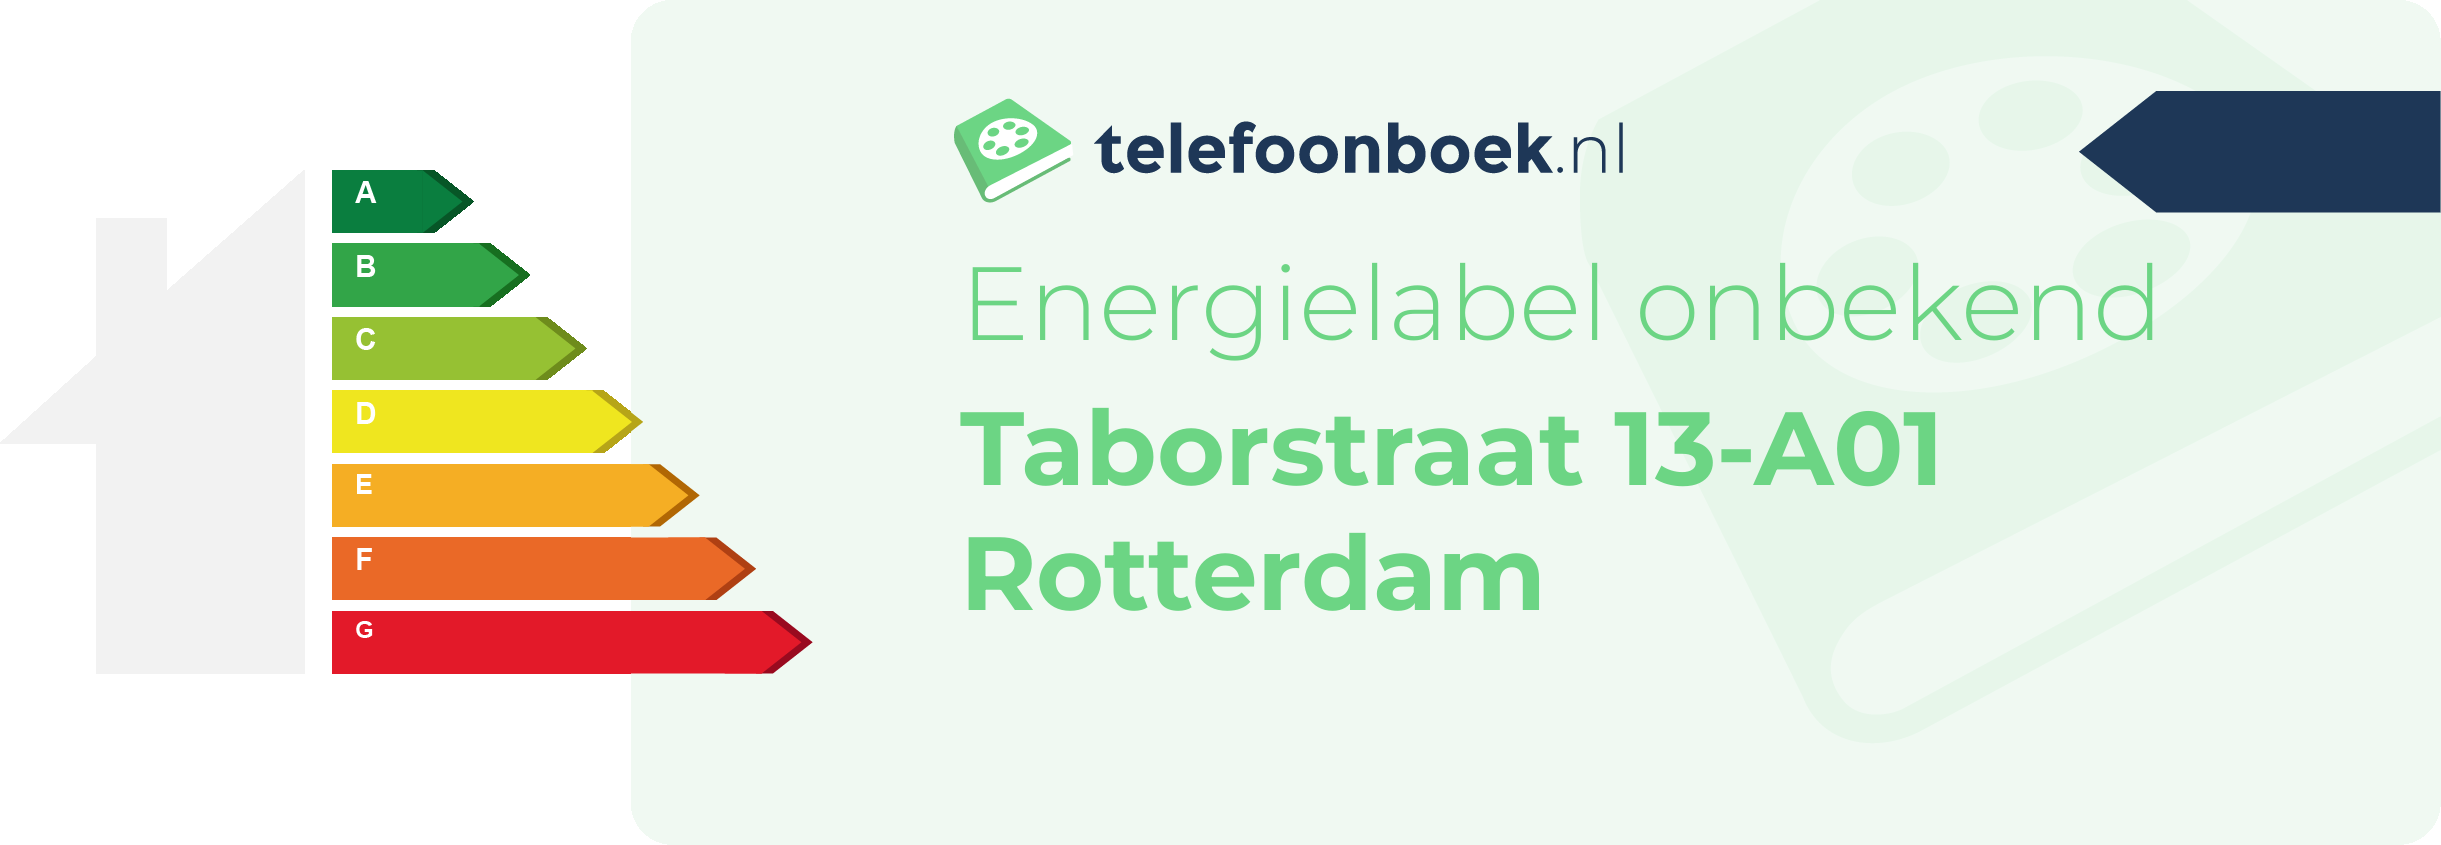 Energielabel Taborstraat 13-A01 Rotterdam